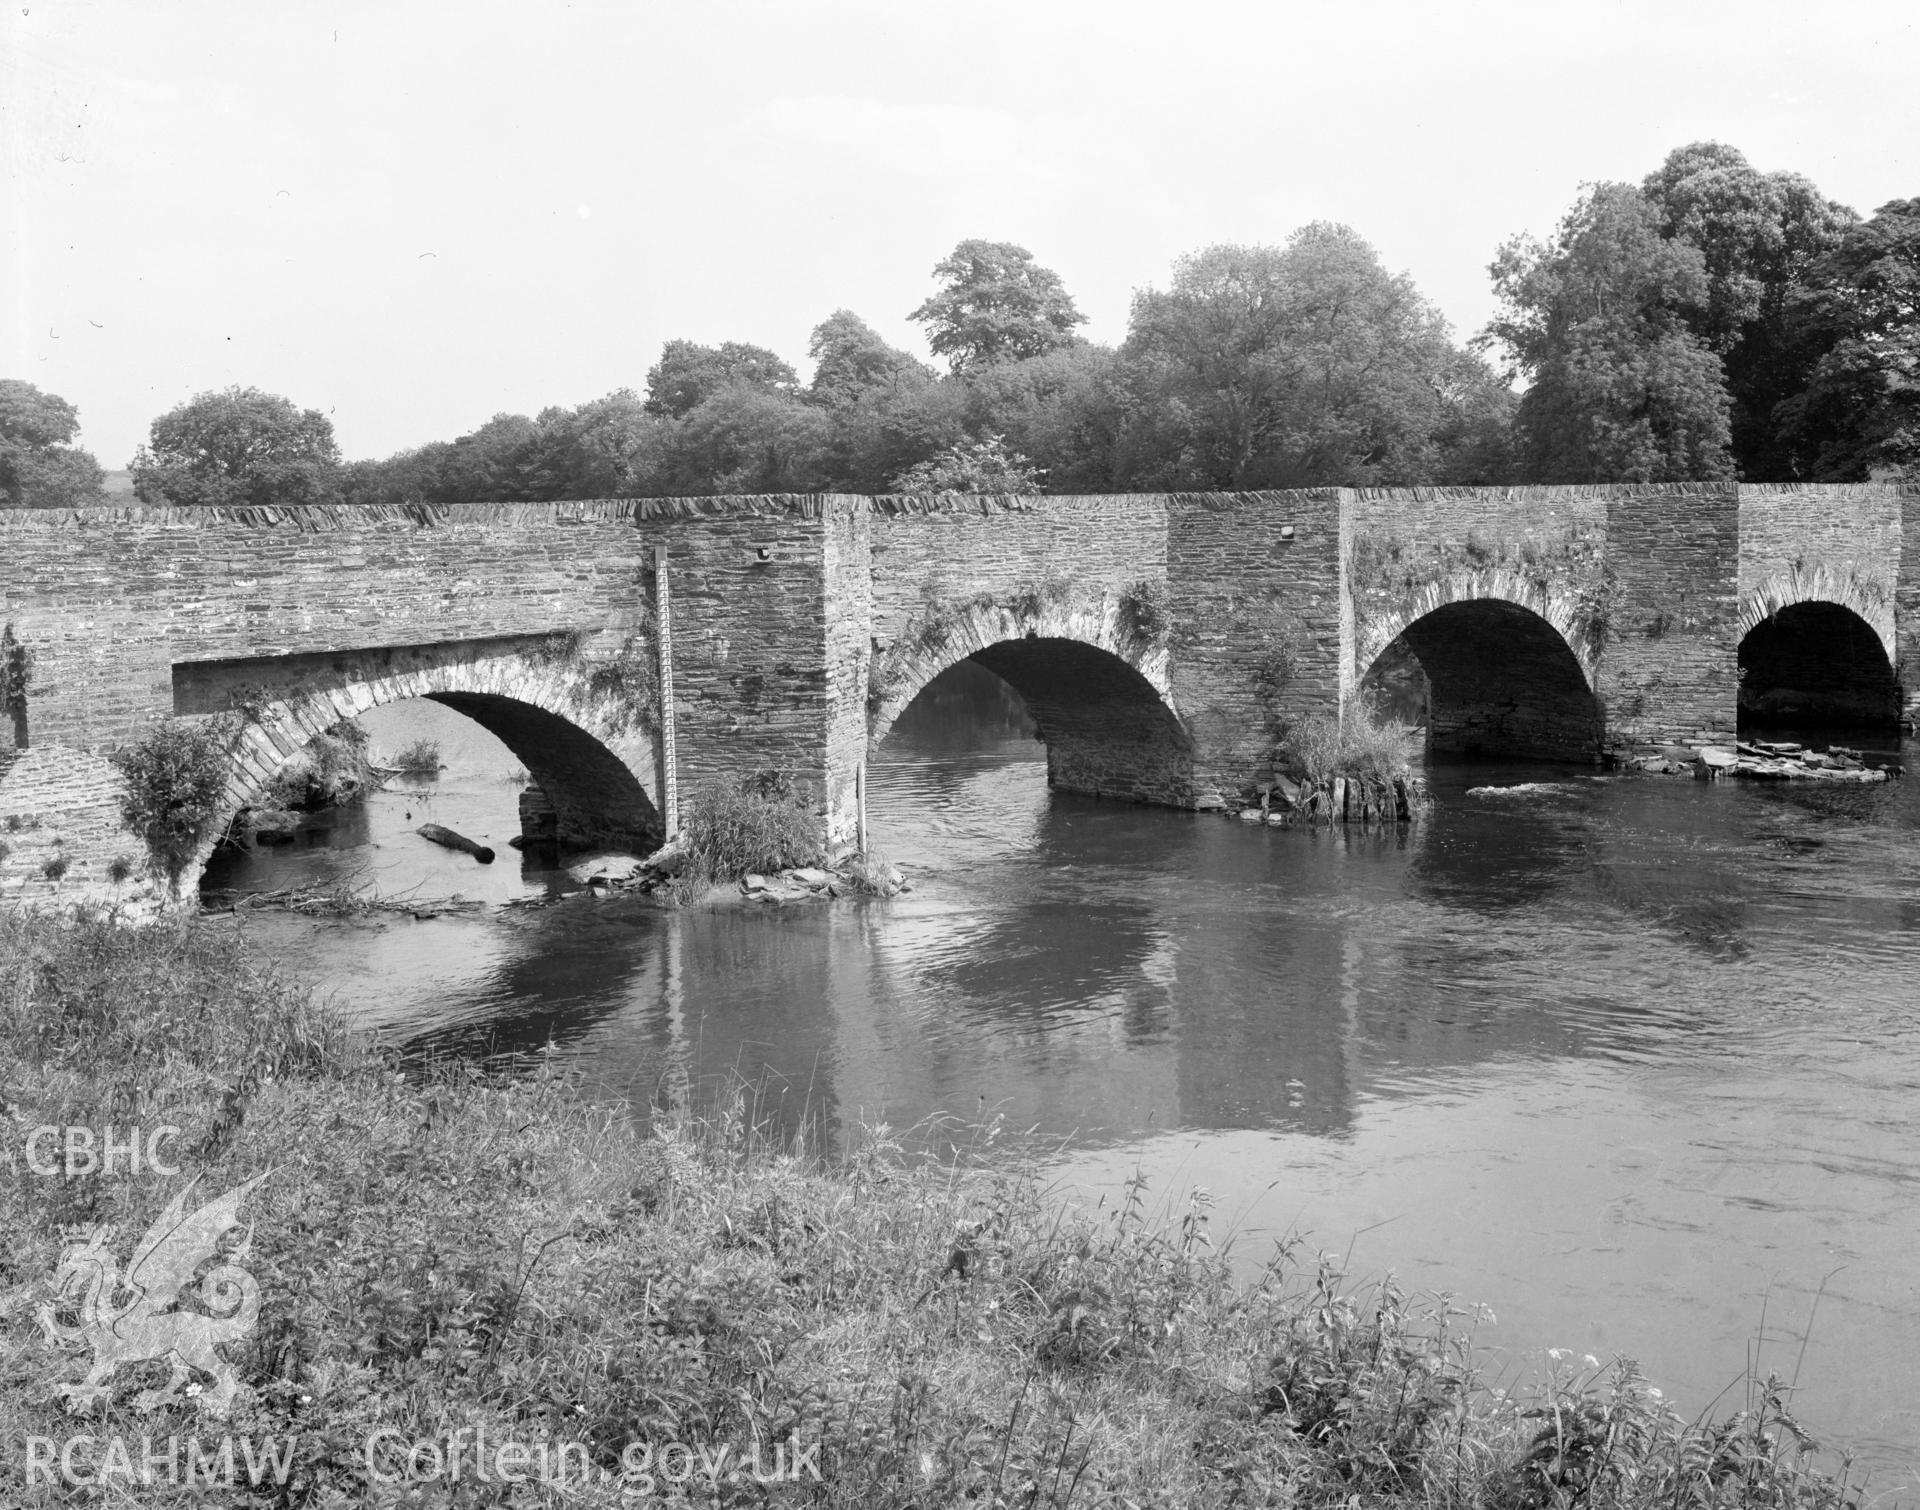 Digital copy of a view of Llechryd Bridge.